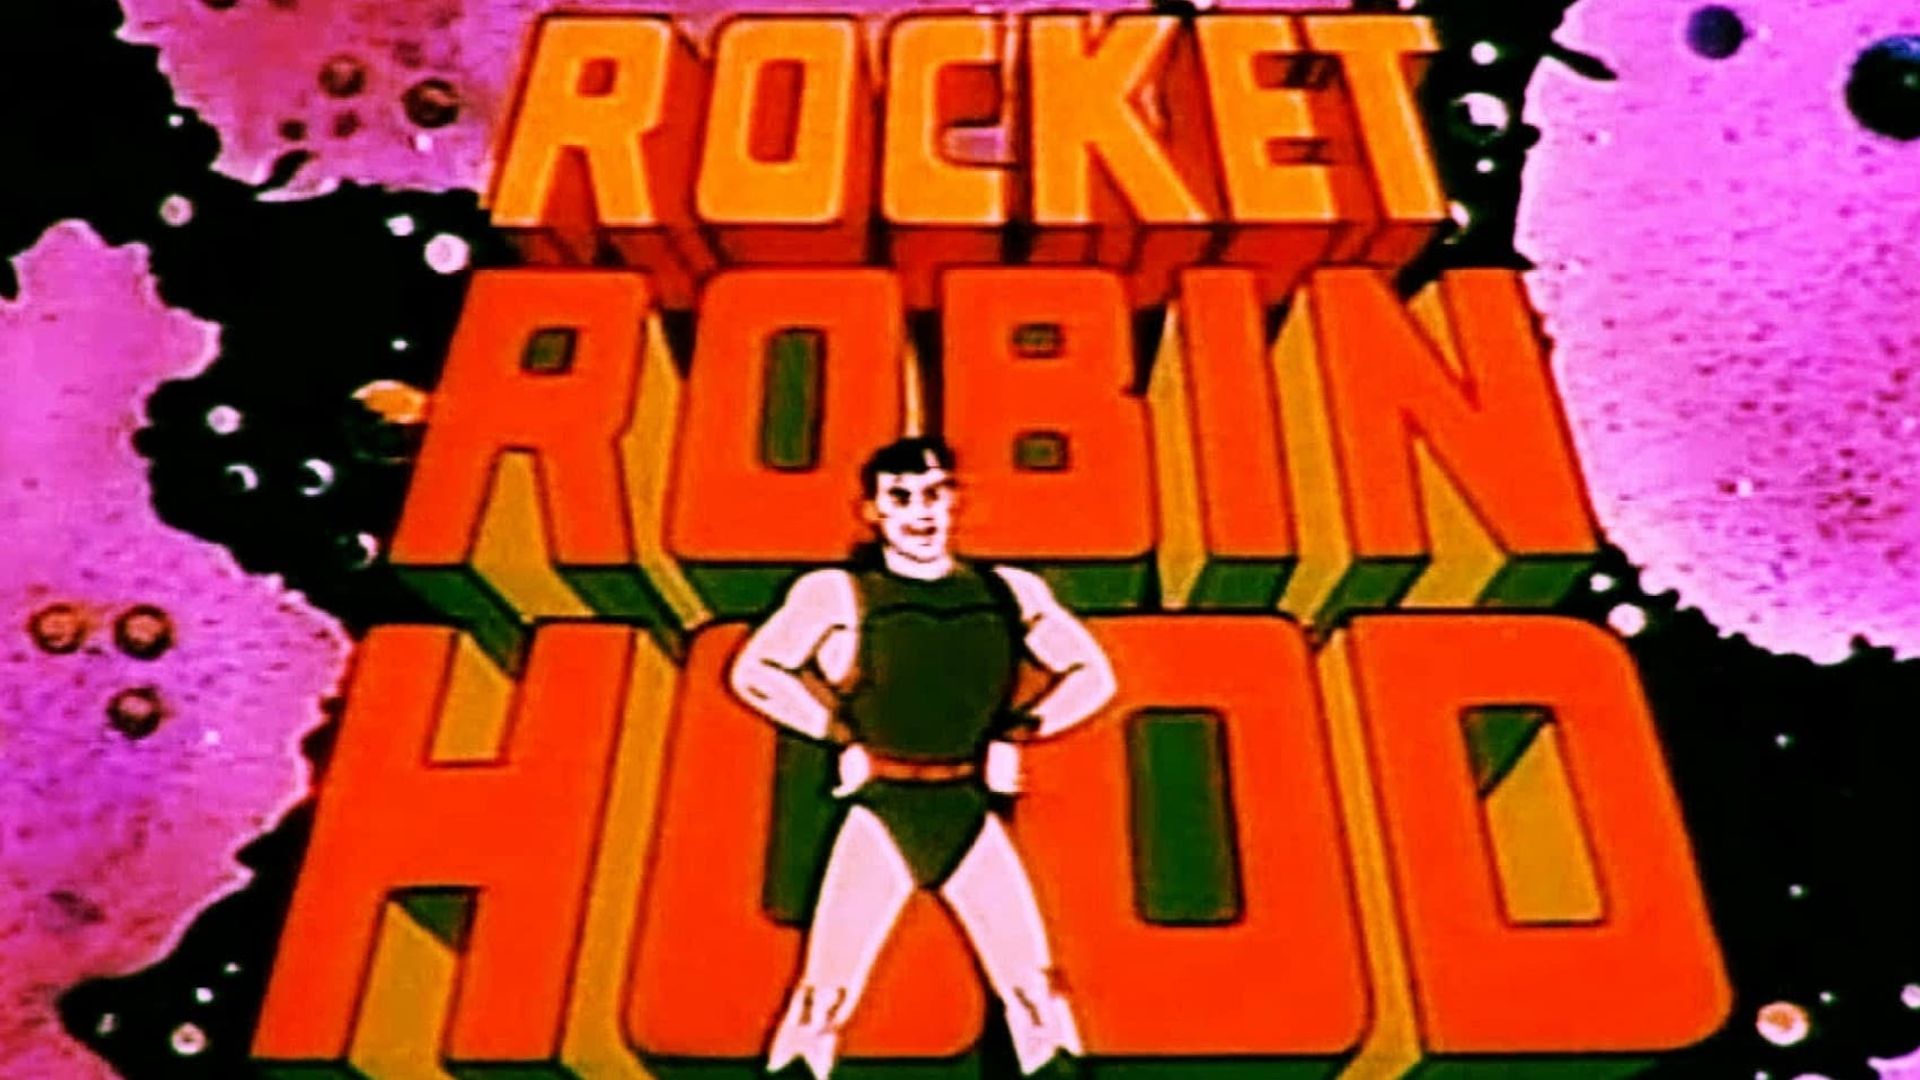 Rocket Robin Hood background